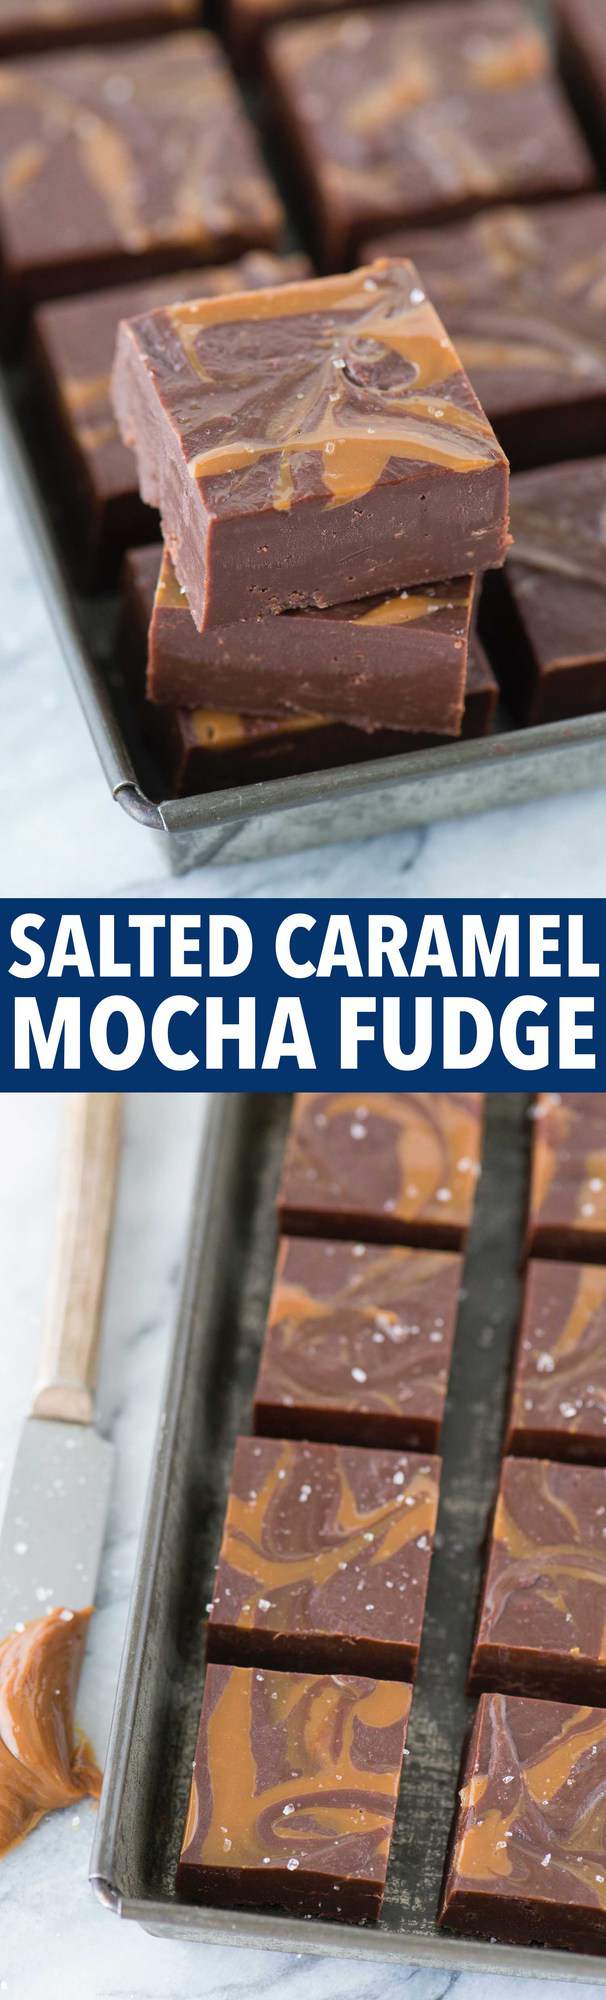 Salted Caramel Mocha Fudge | The First Year